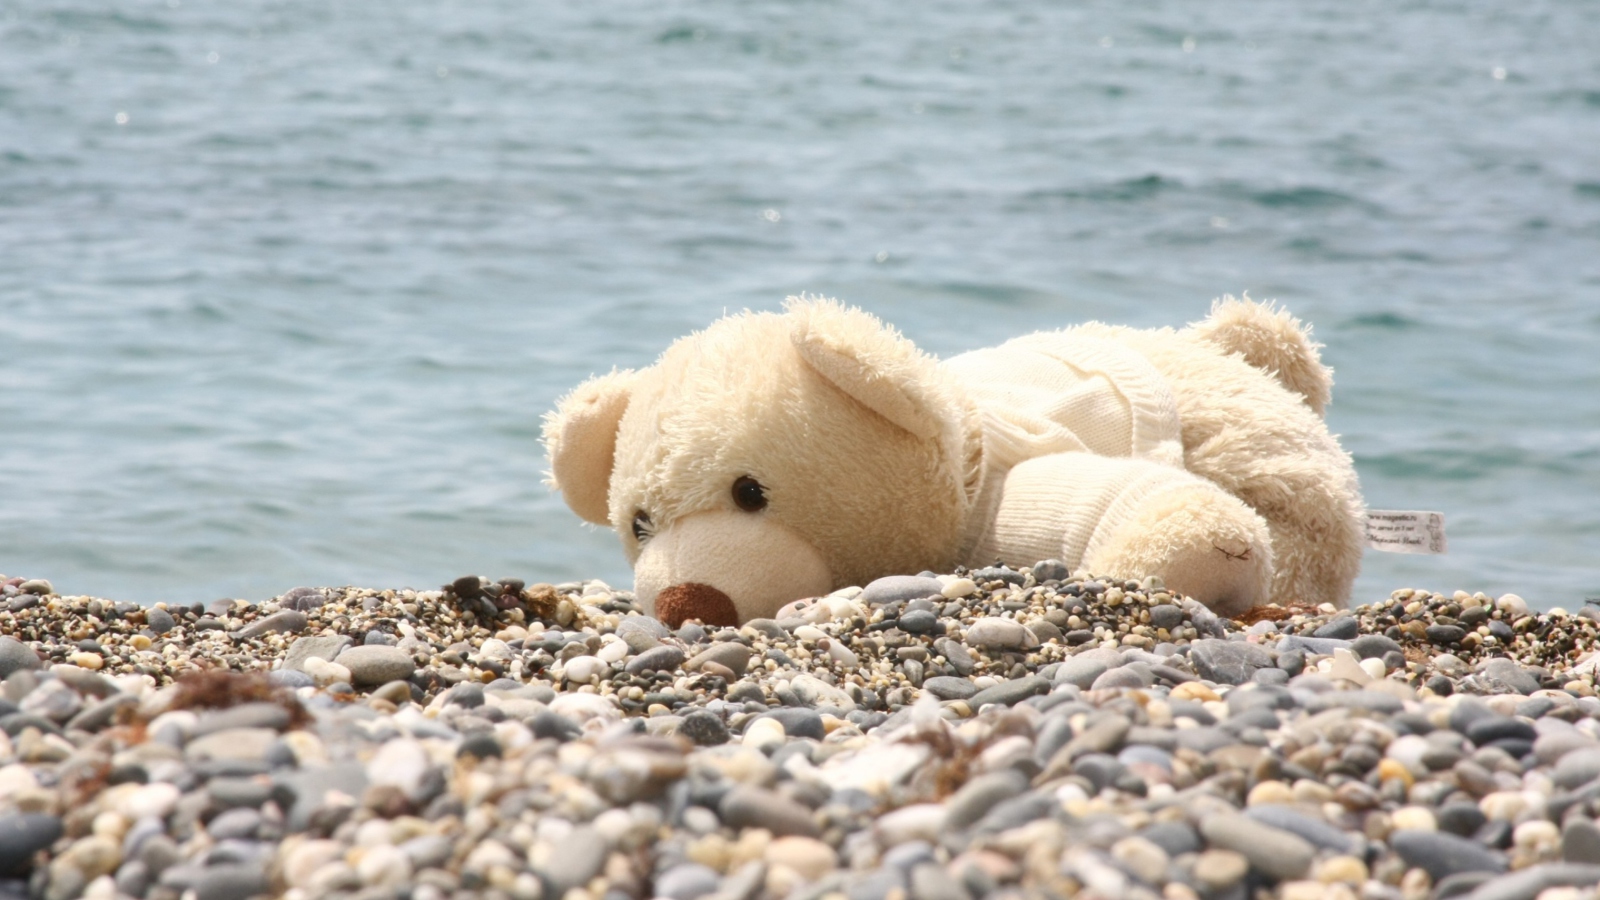 White Teddy Forgotten On Beach wallpaper 1600x900